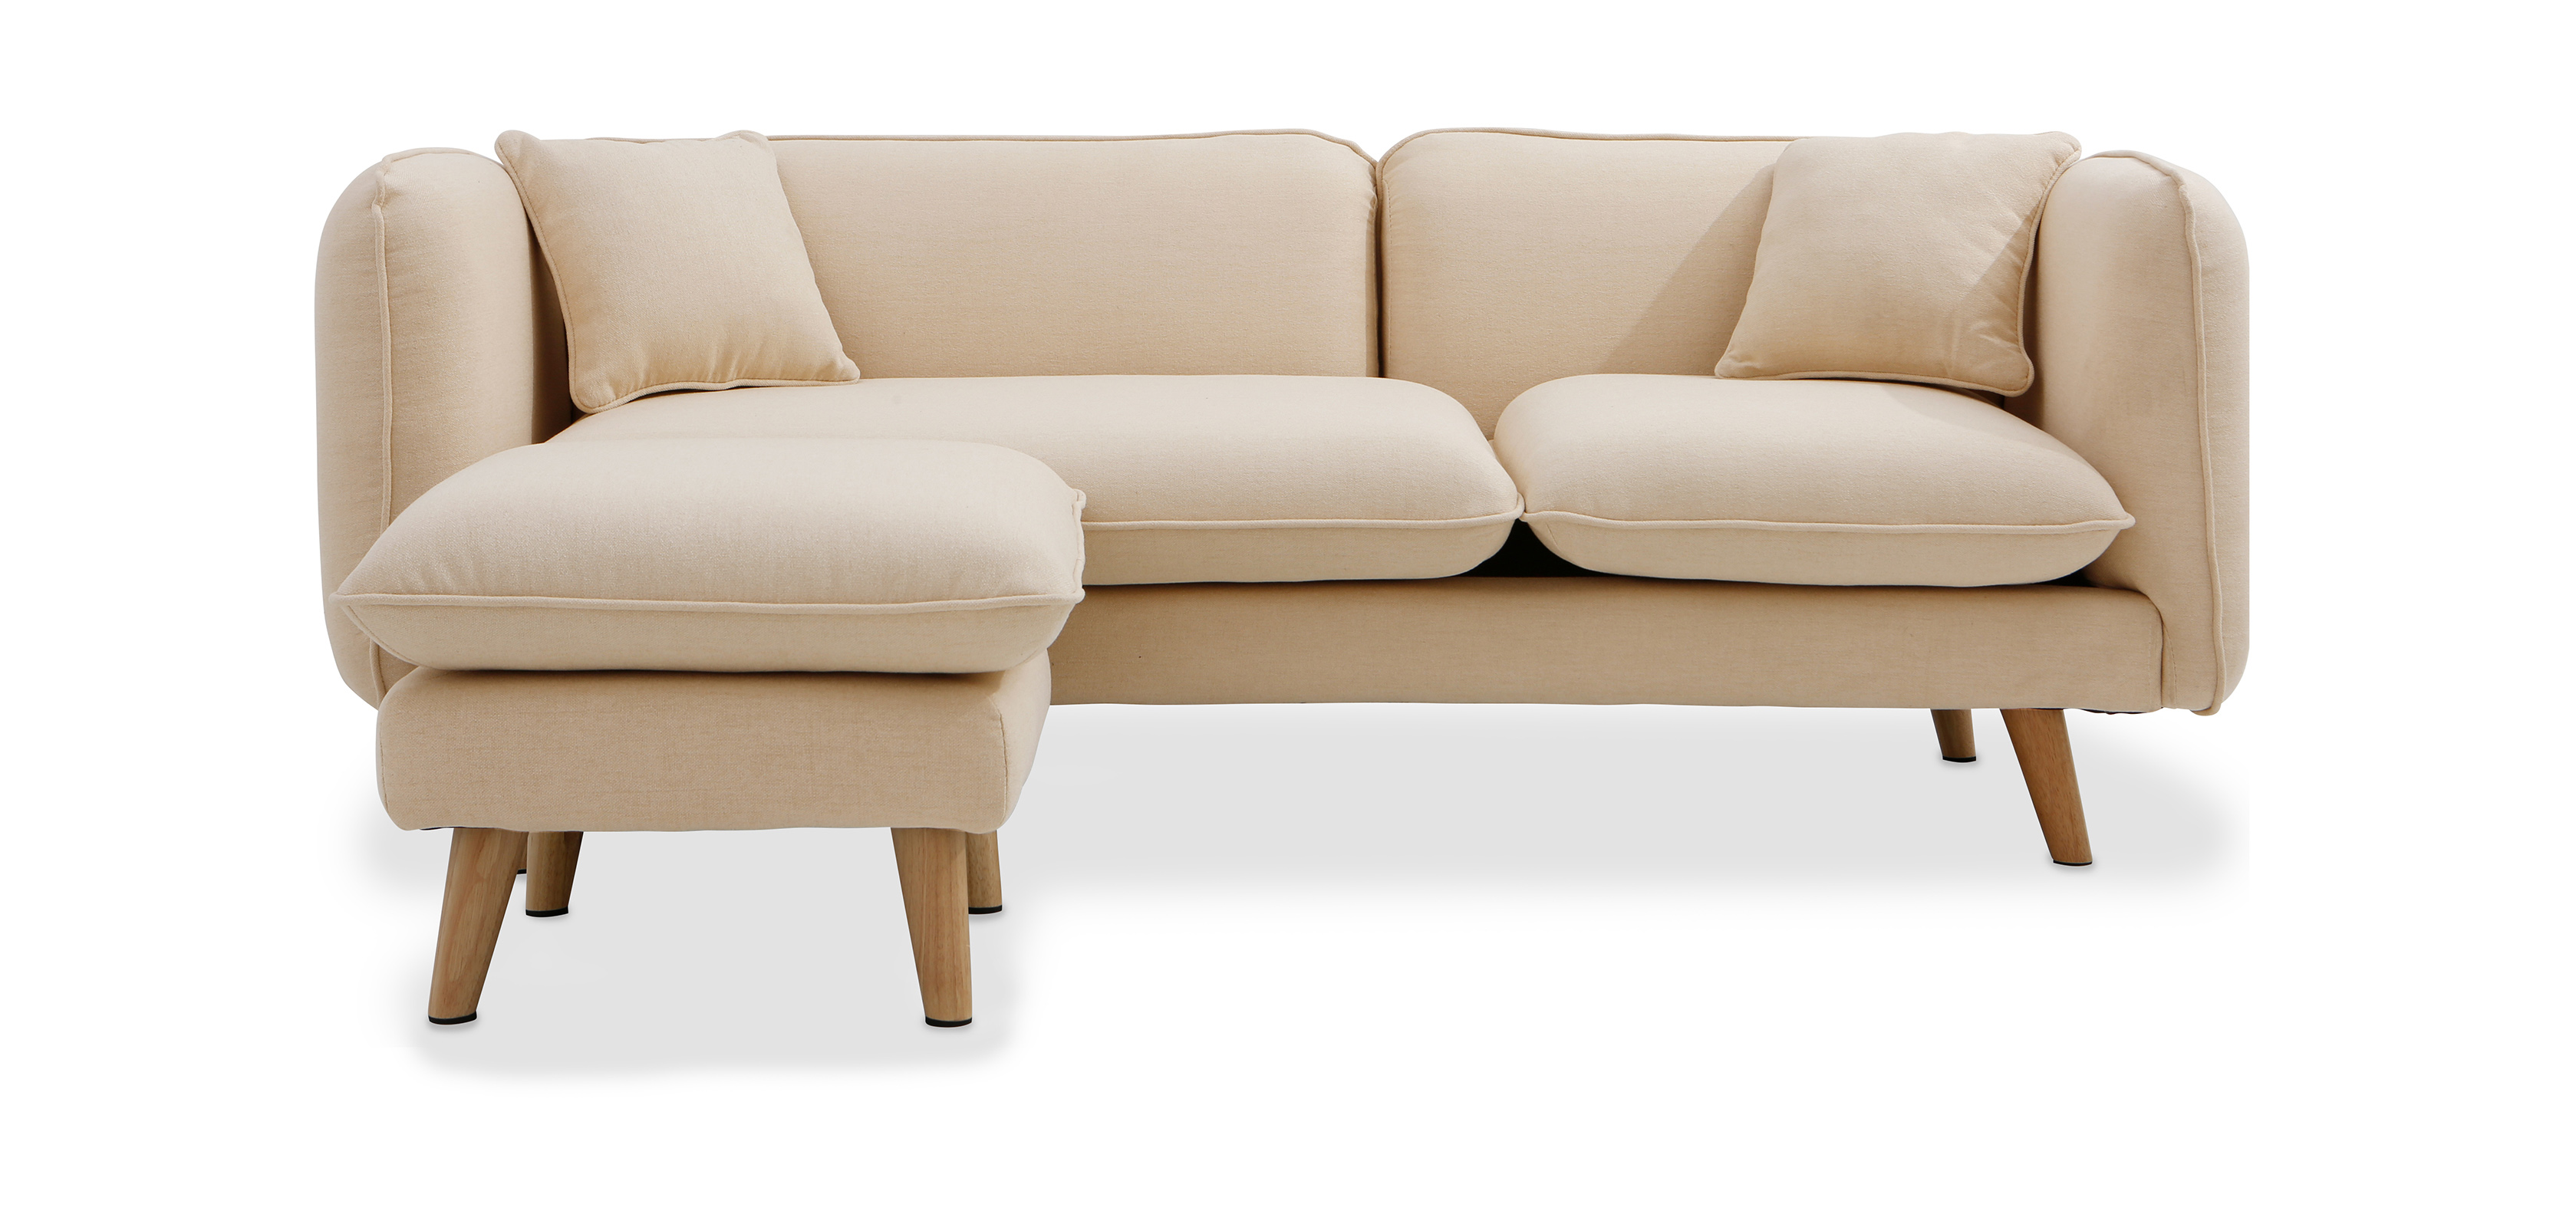 scandinavian designs leather sofa review